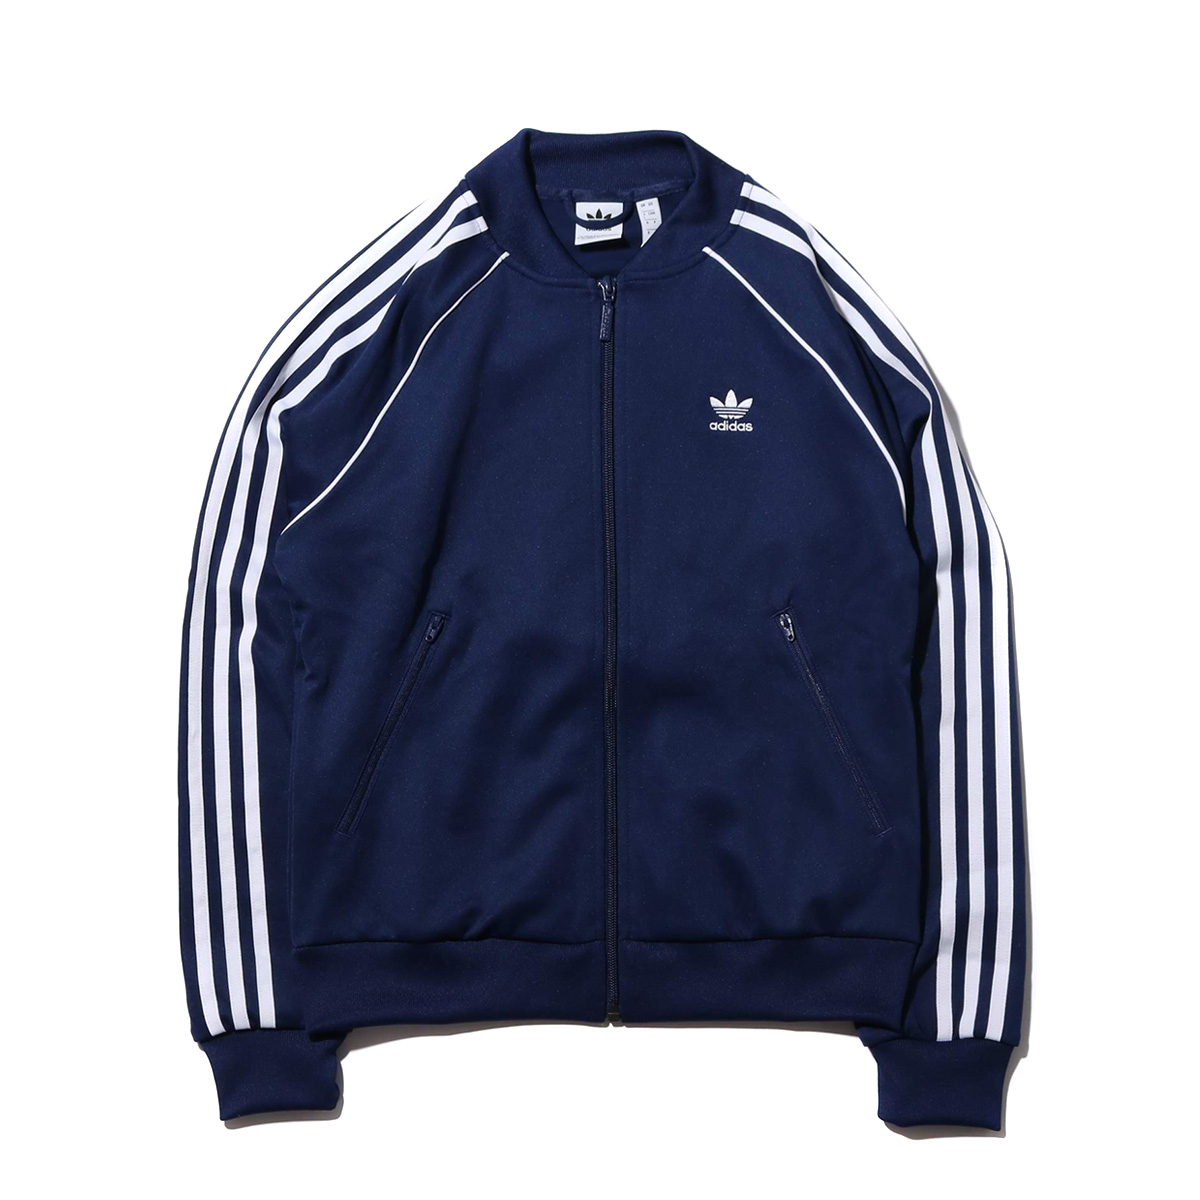 navy blue adidas jacket